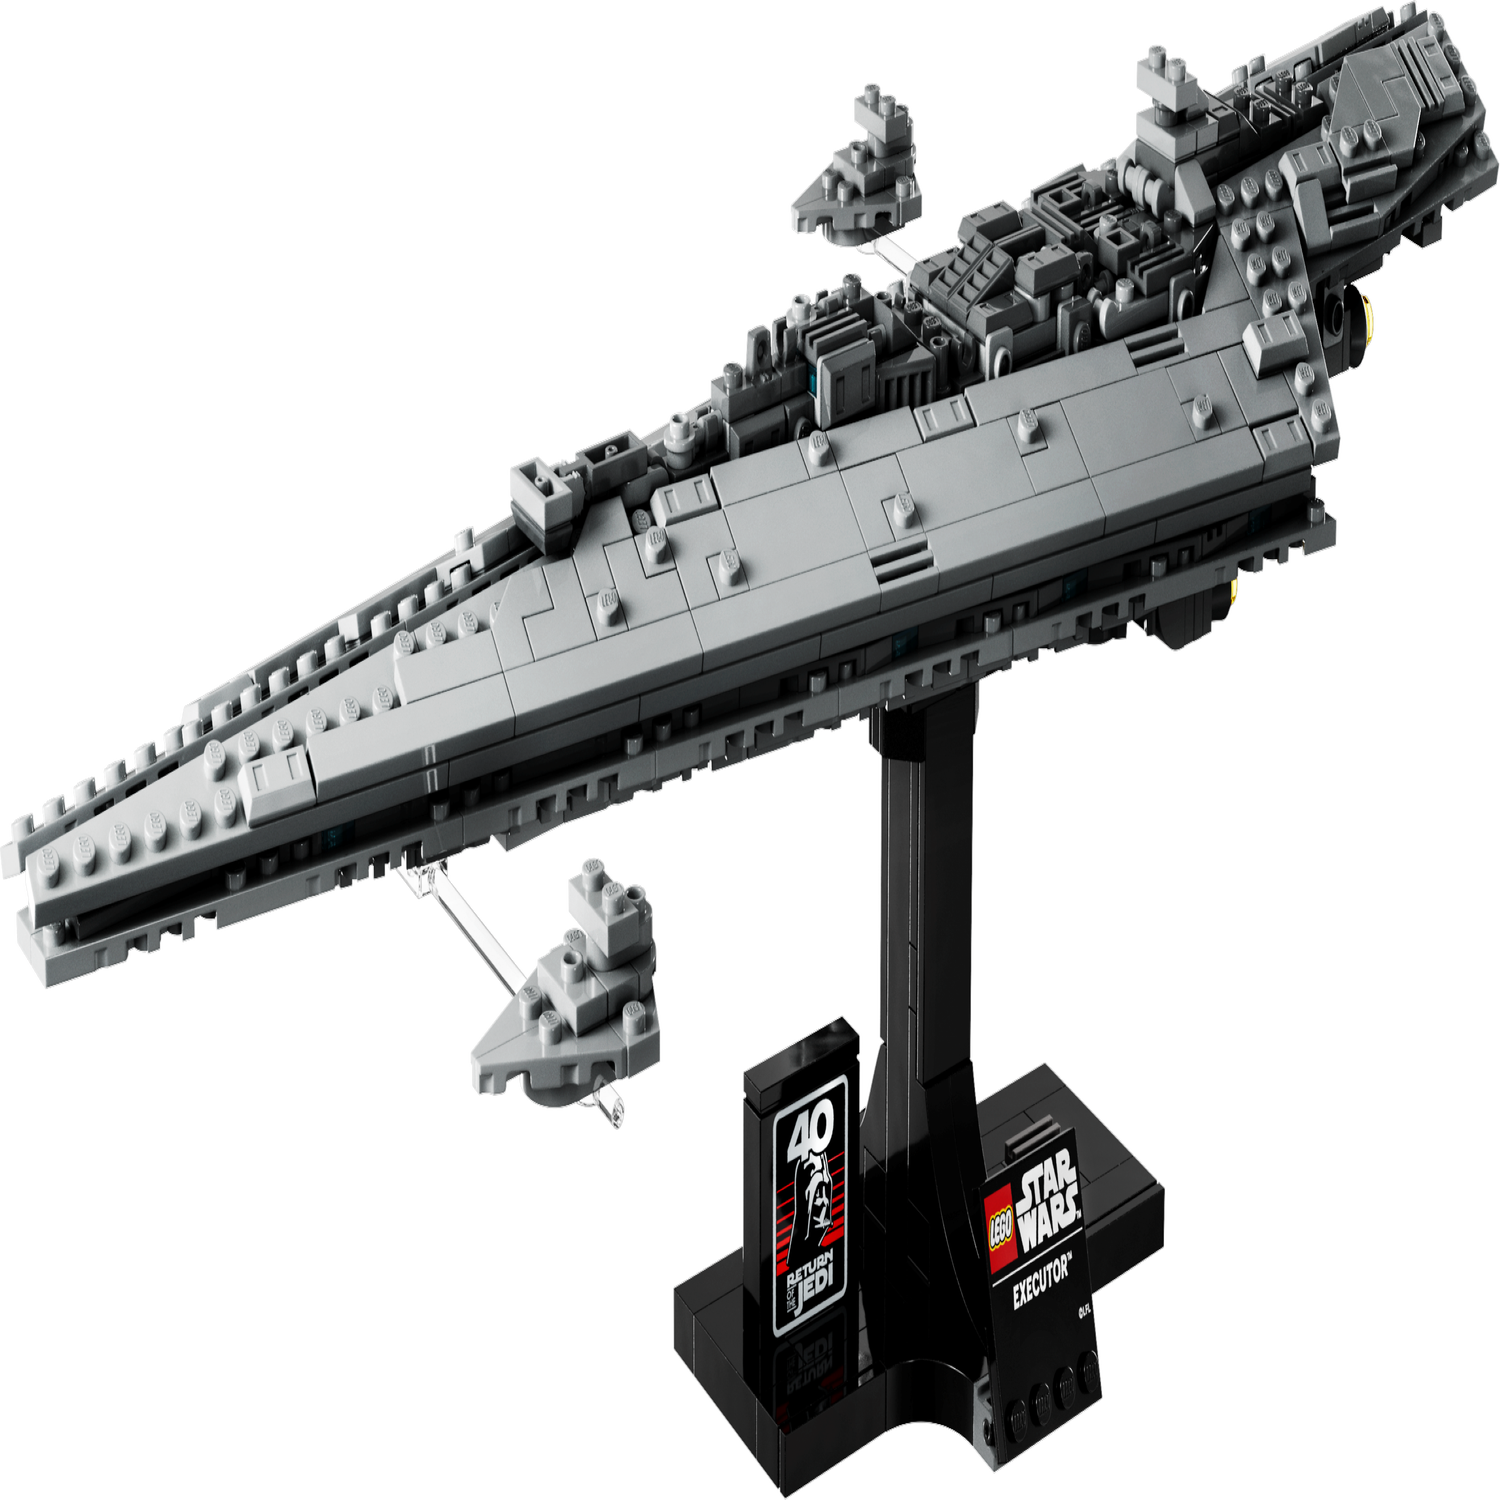 Executor Super Star Destroyer™ 75356 | Star Wars™ | Buy online at the  Official LEGO® Shop US